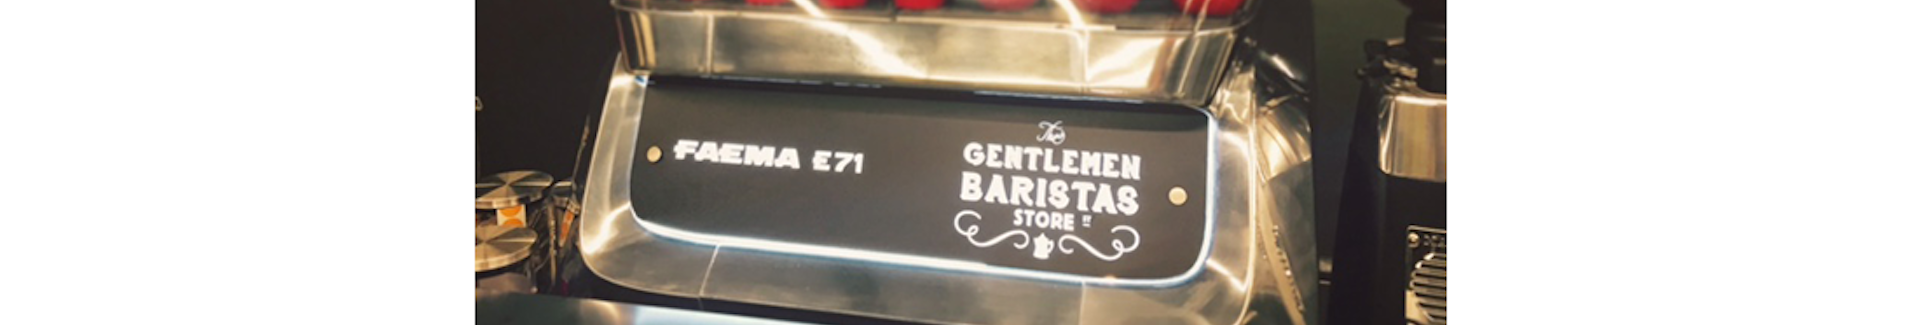 Faema E71 at The Gentlemen's Barista